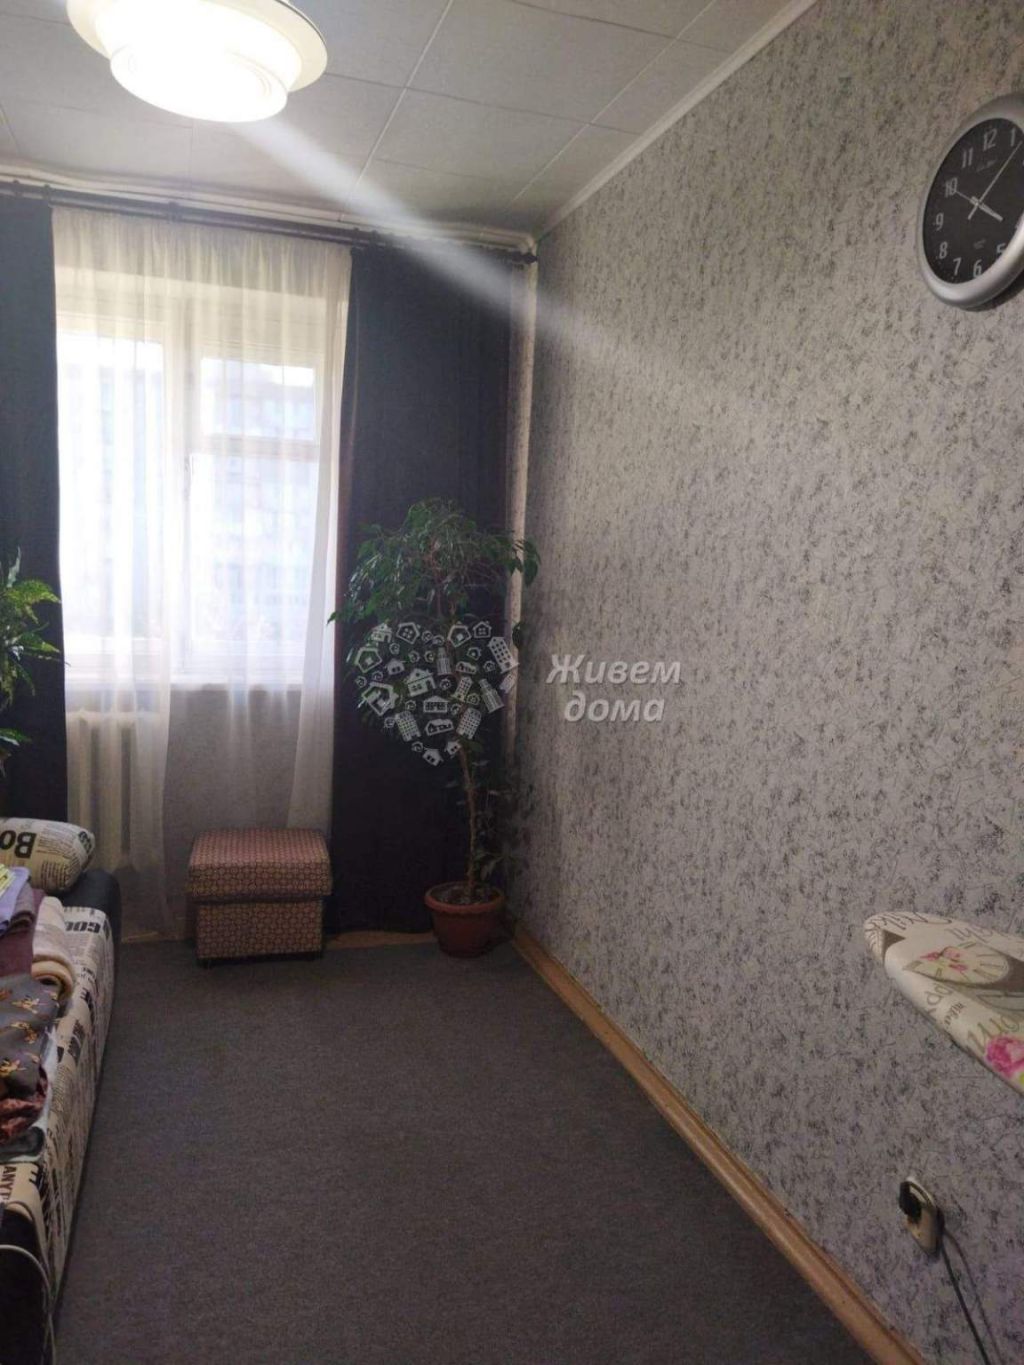 Продается 2-комн. квартира 44 кв.м. в Волгограде, цена: 2 950 000₽ объявление №275355 от 25.07.2022 | Продажа квартиры в Волгограде | Авеланго